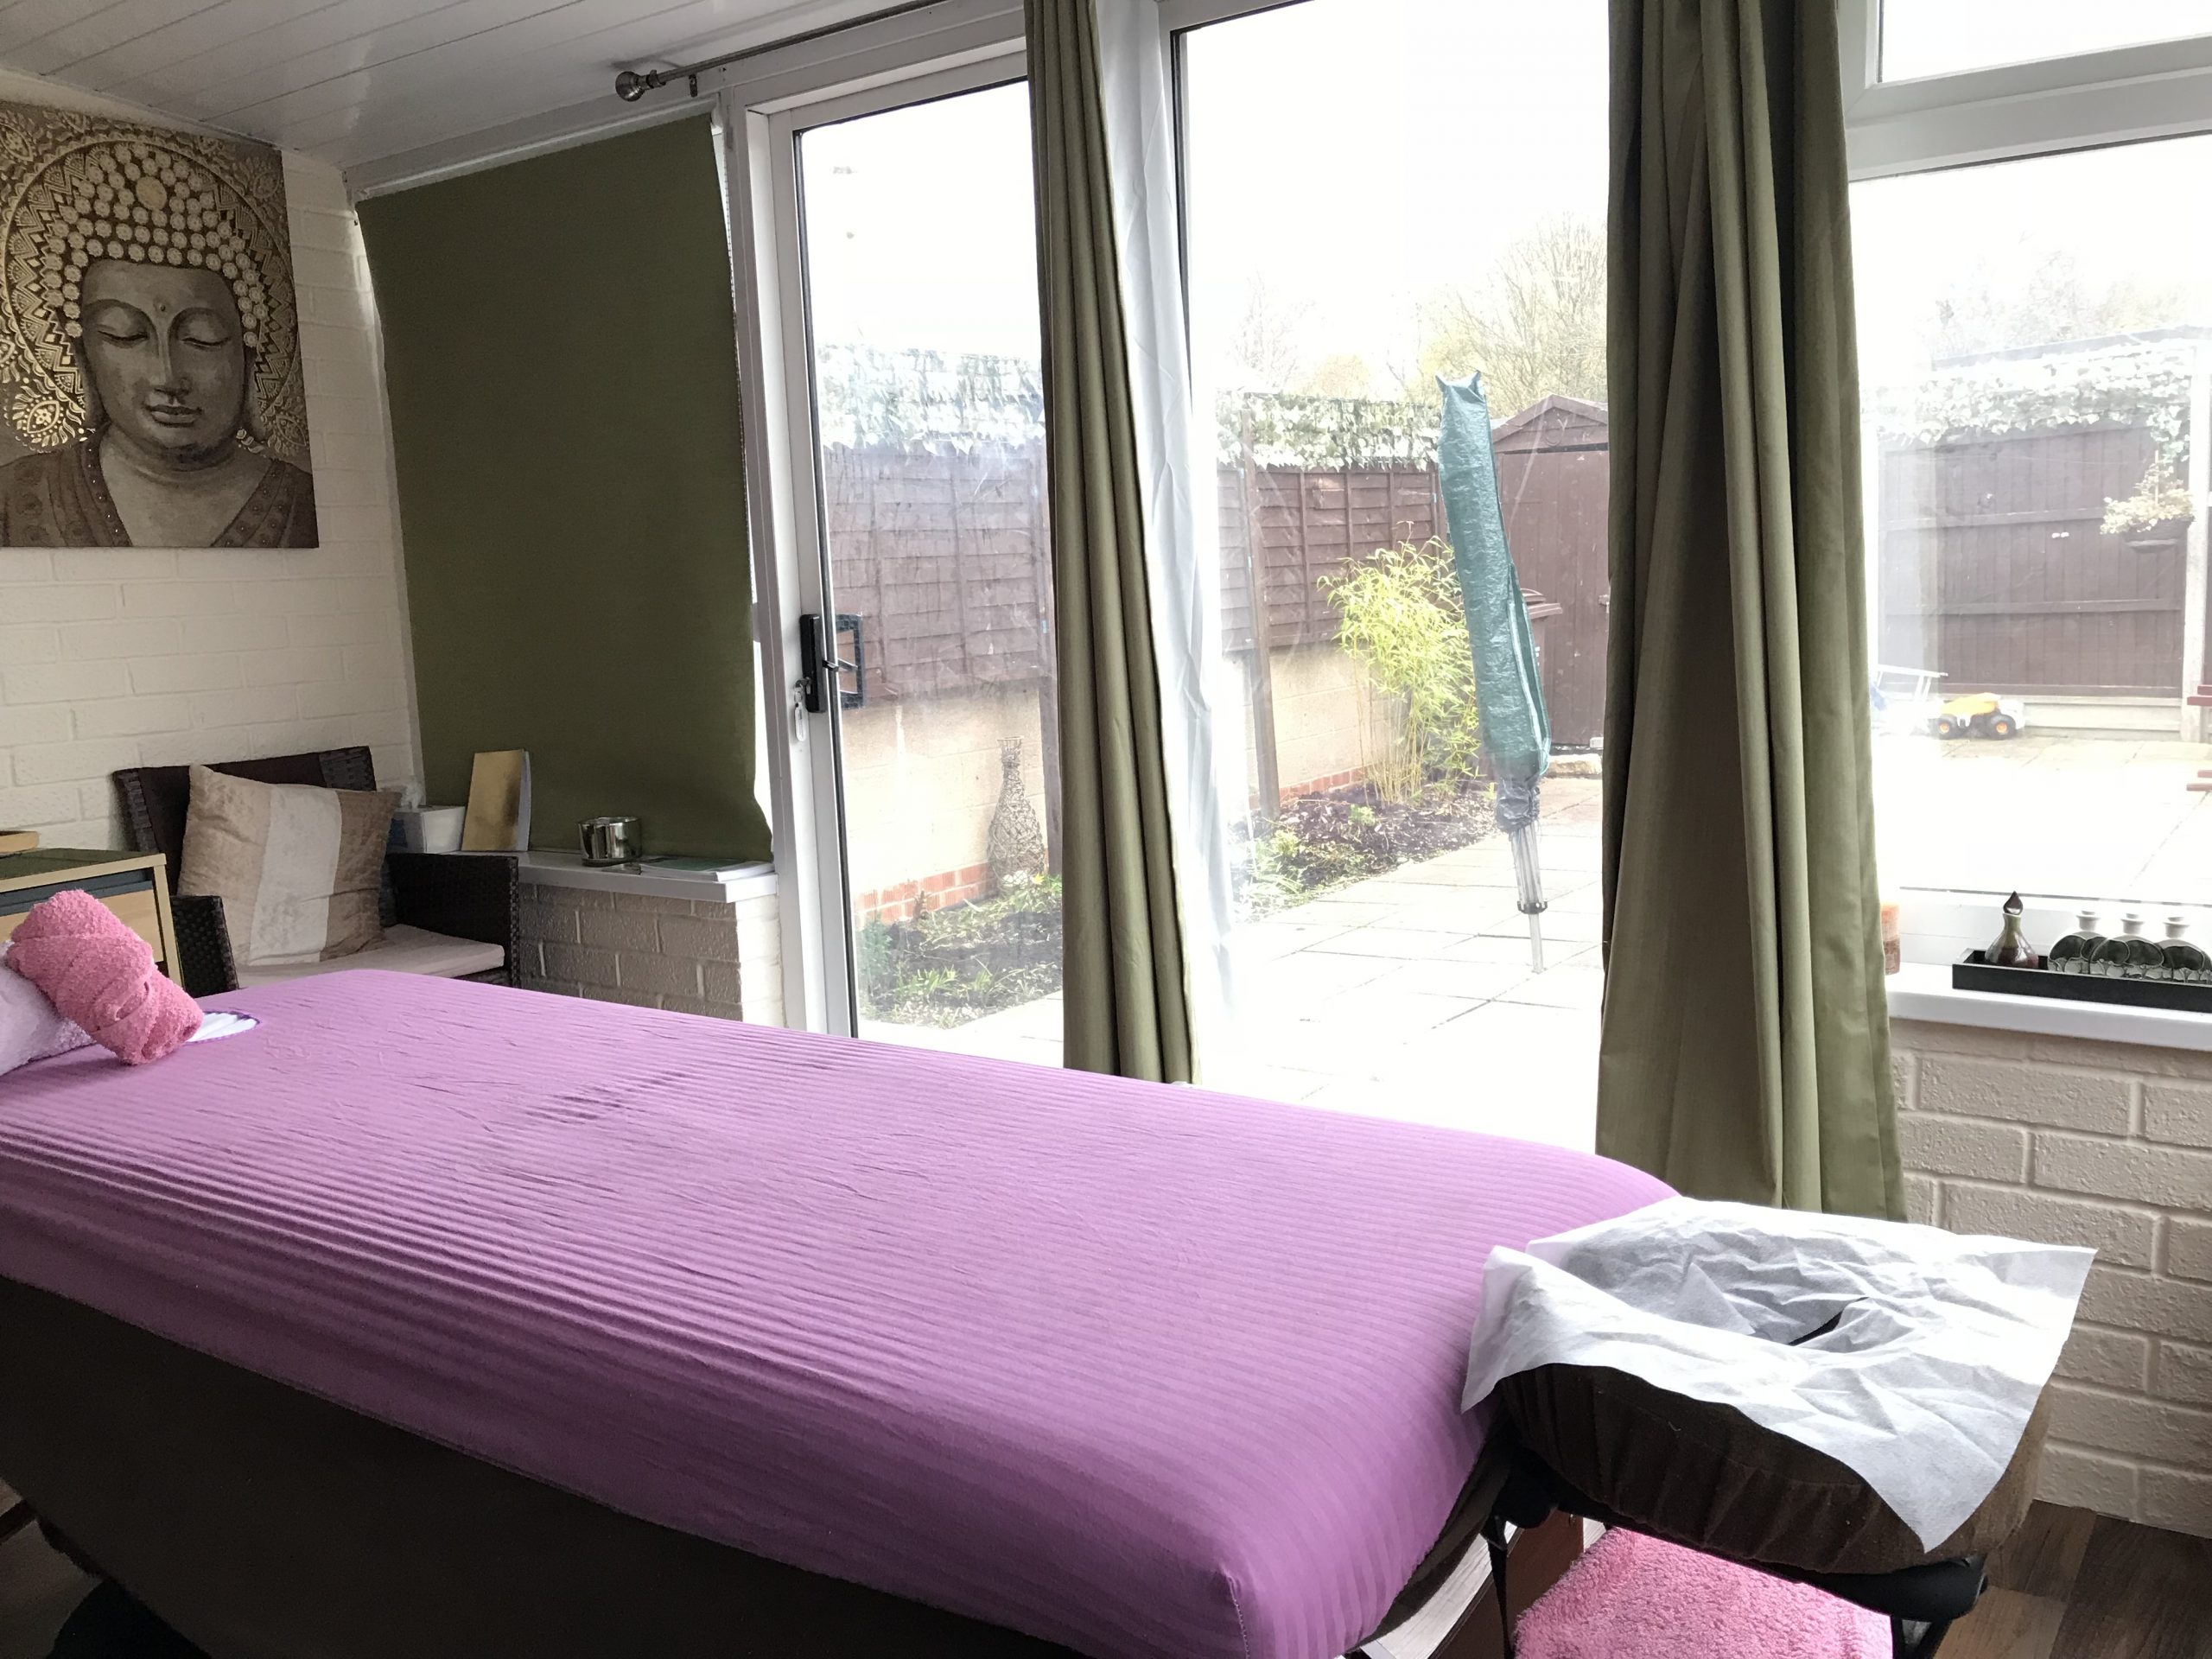 Picture of Kris Massage Room